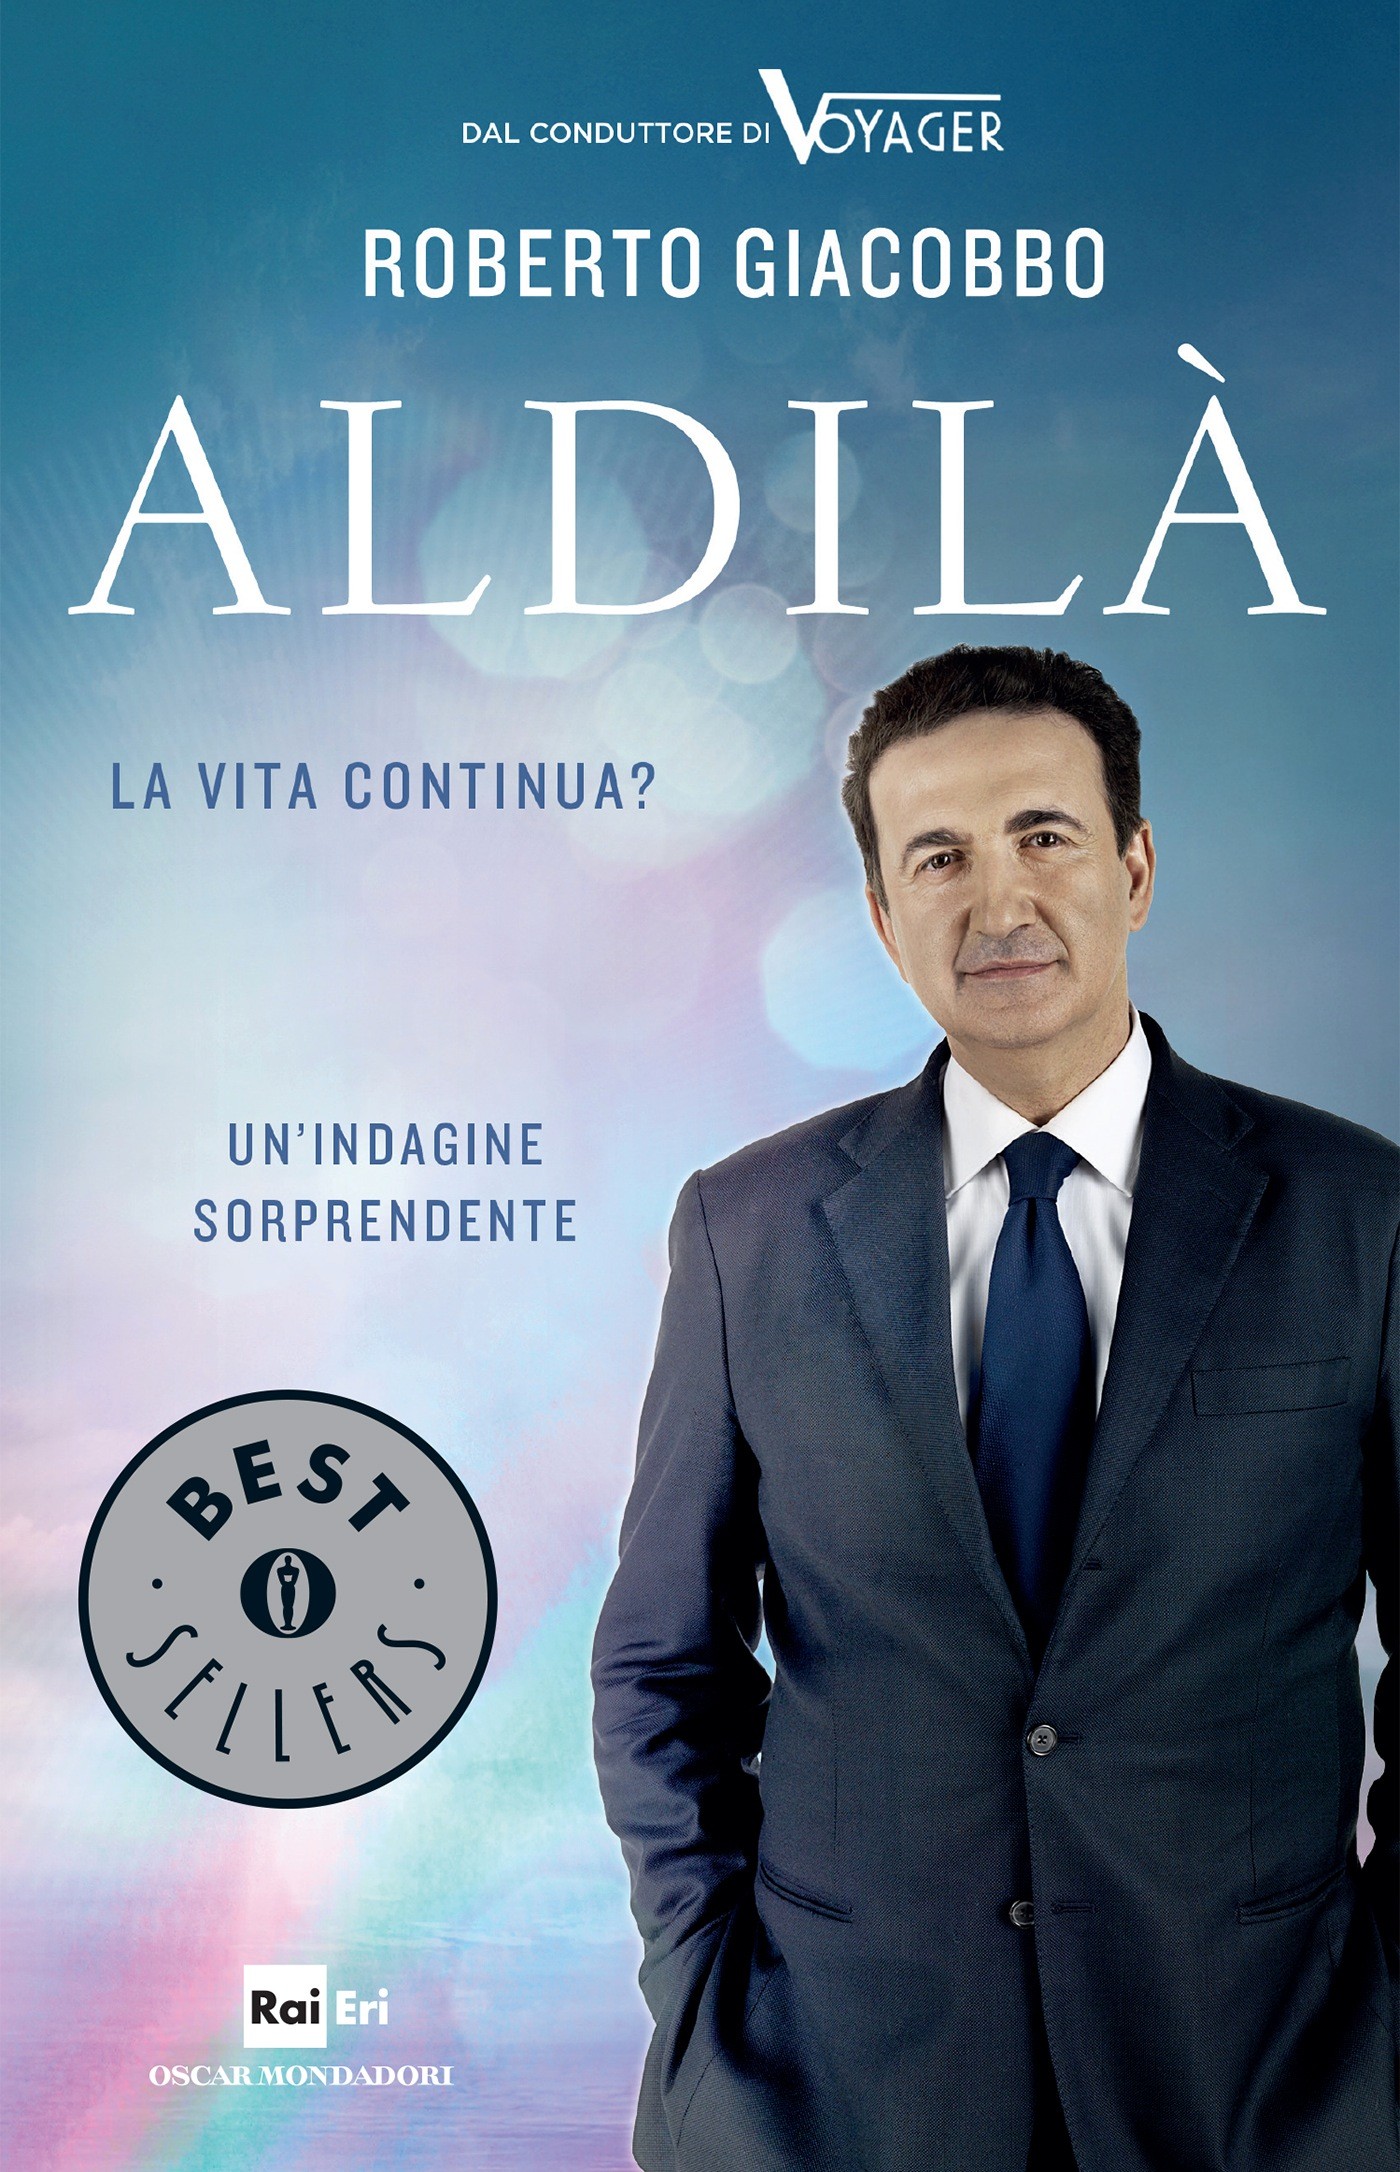 Aldilà - Librerie.coop